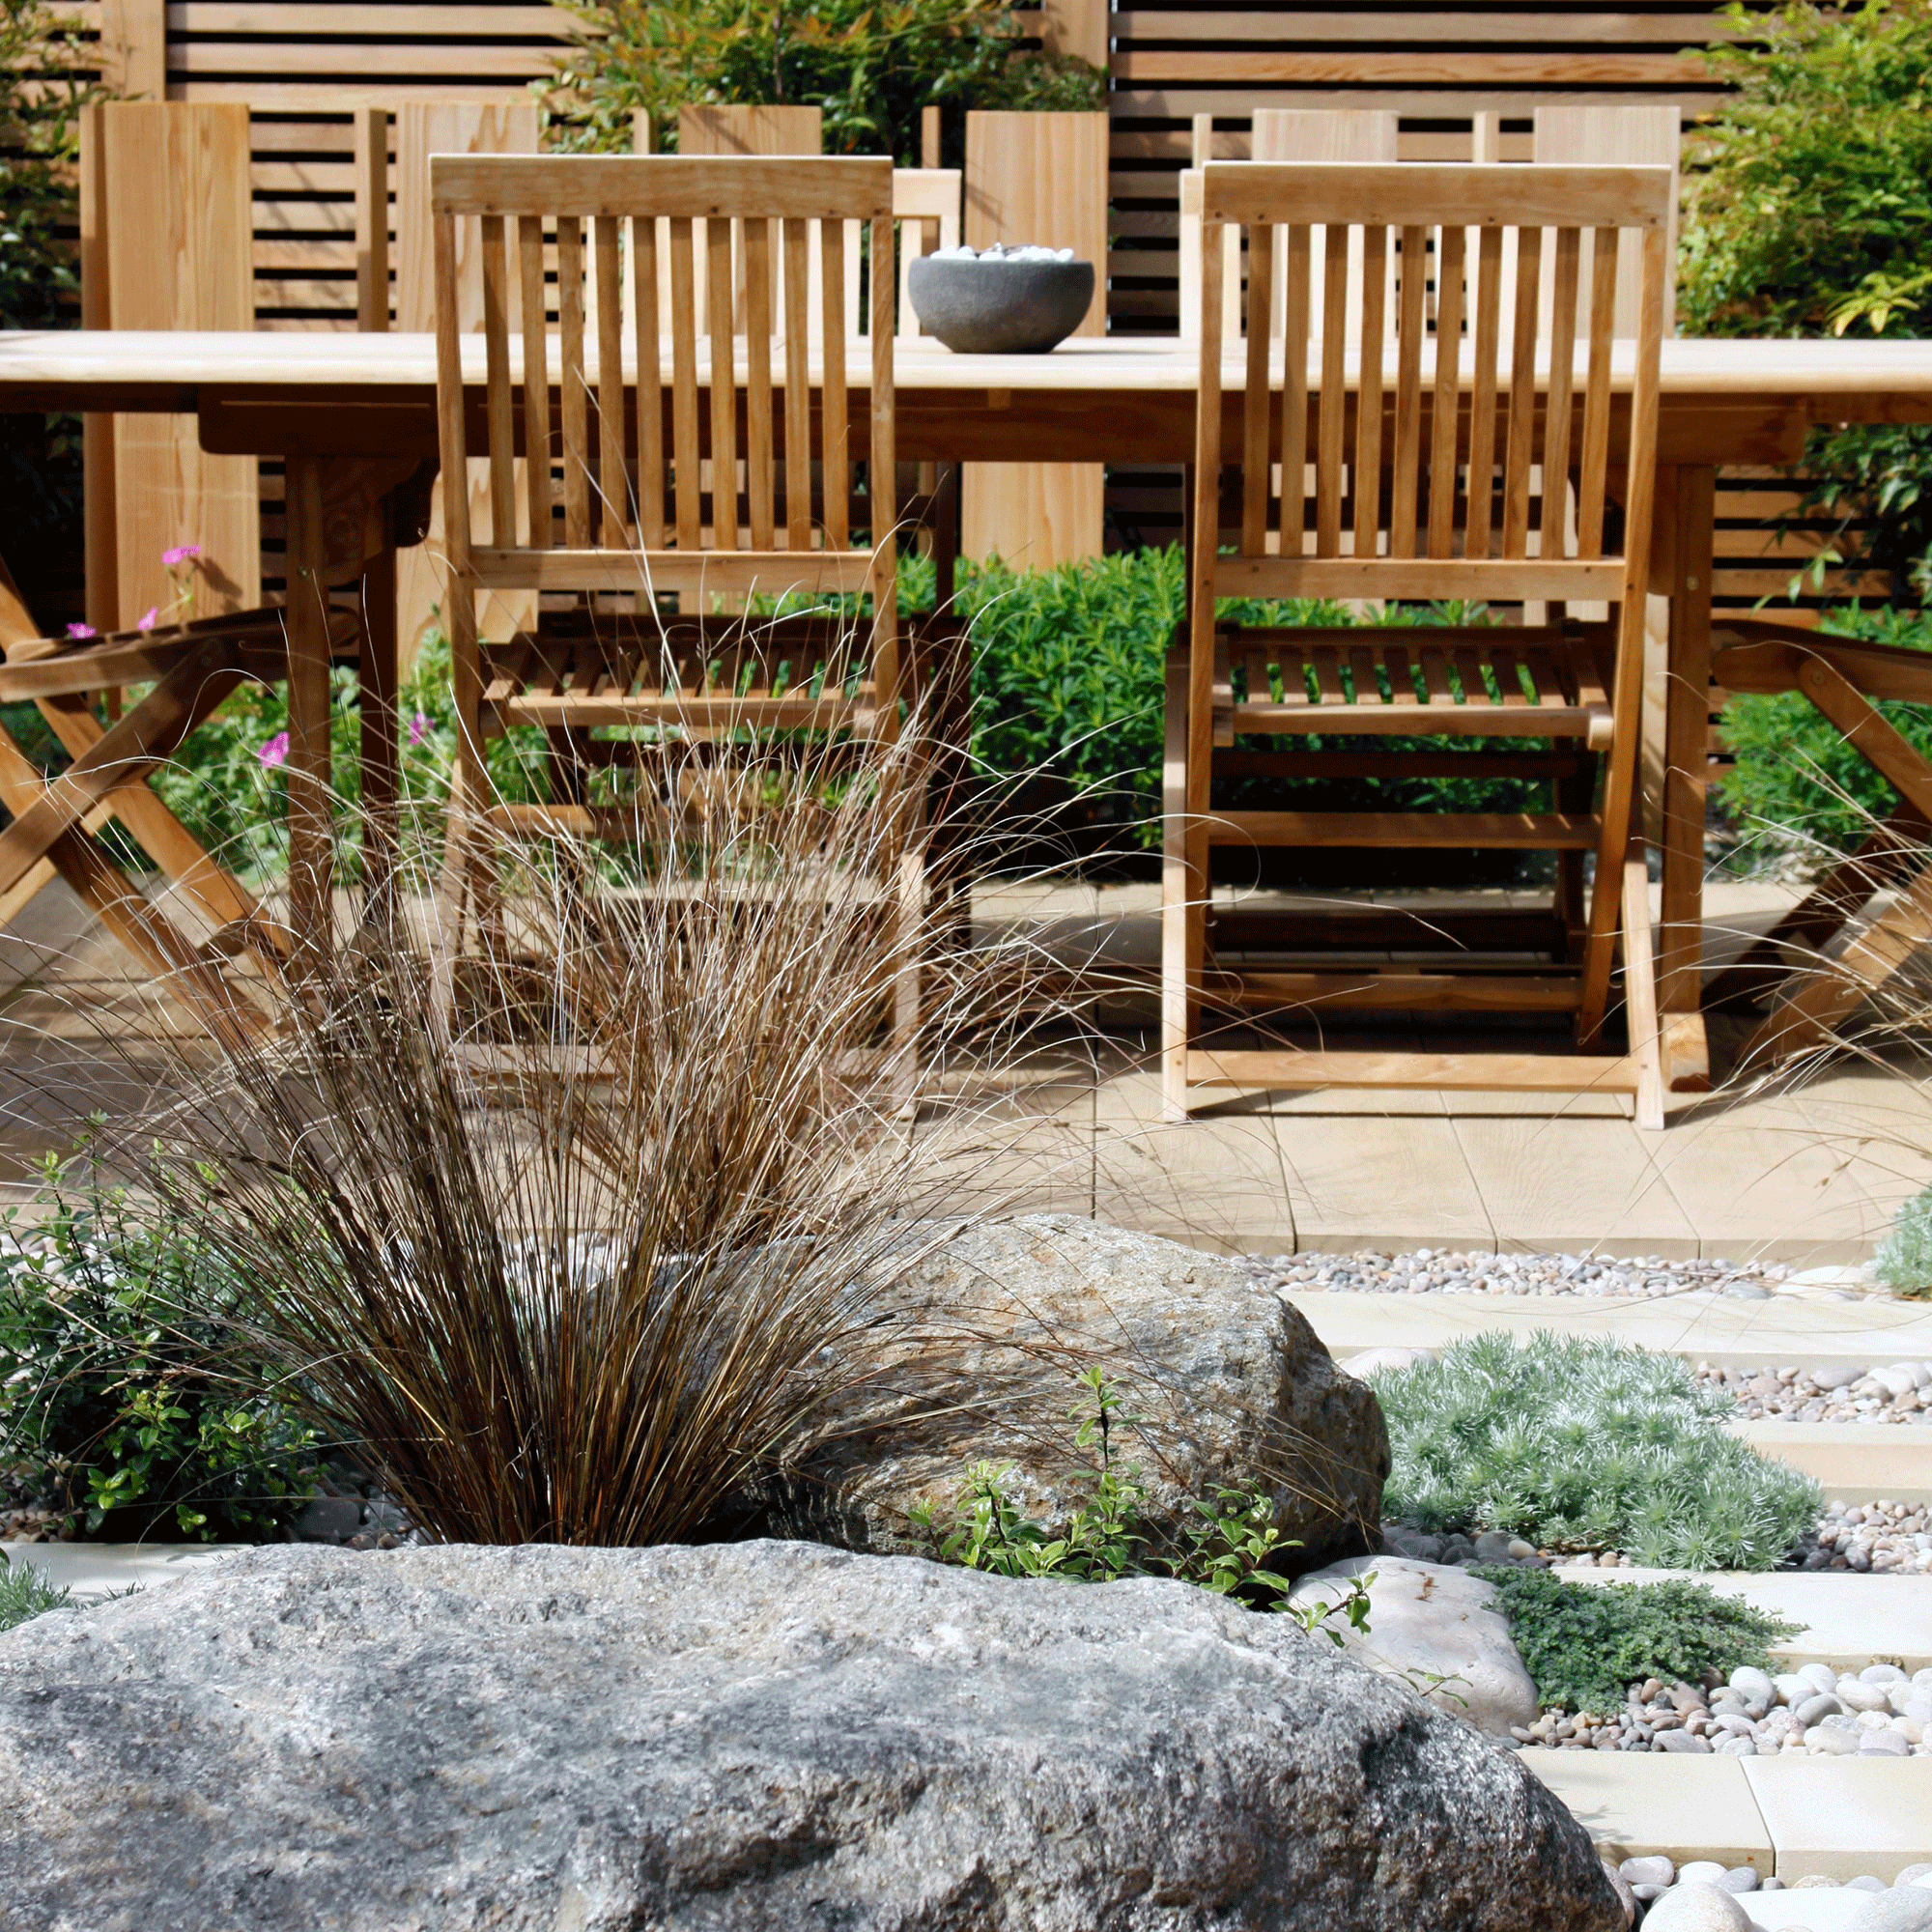 Rock garden with wooden furniture